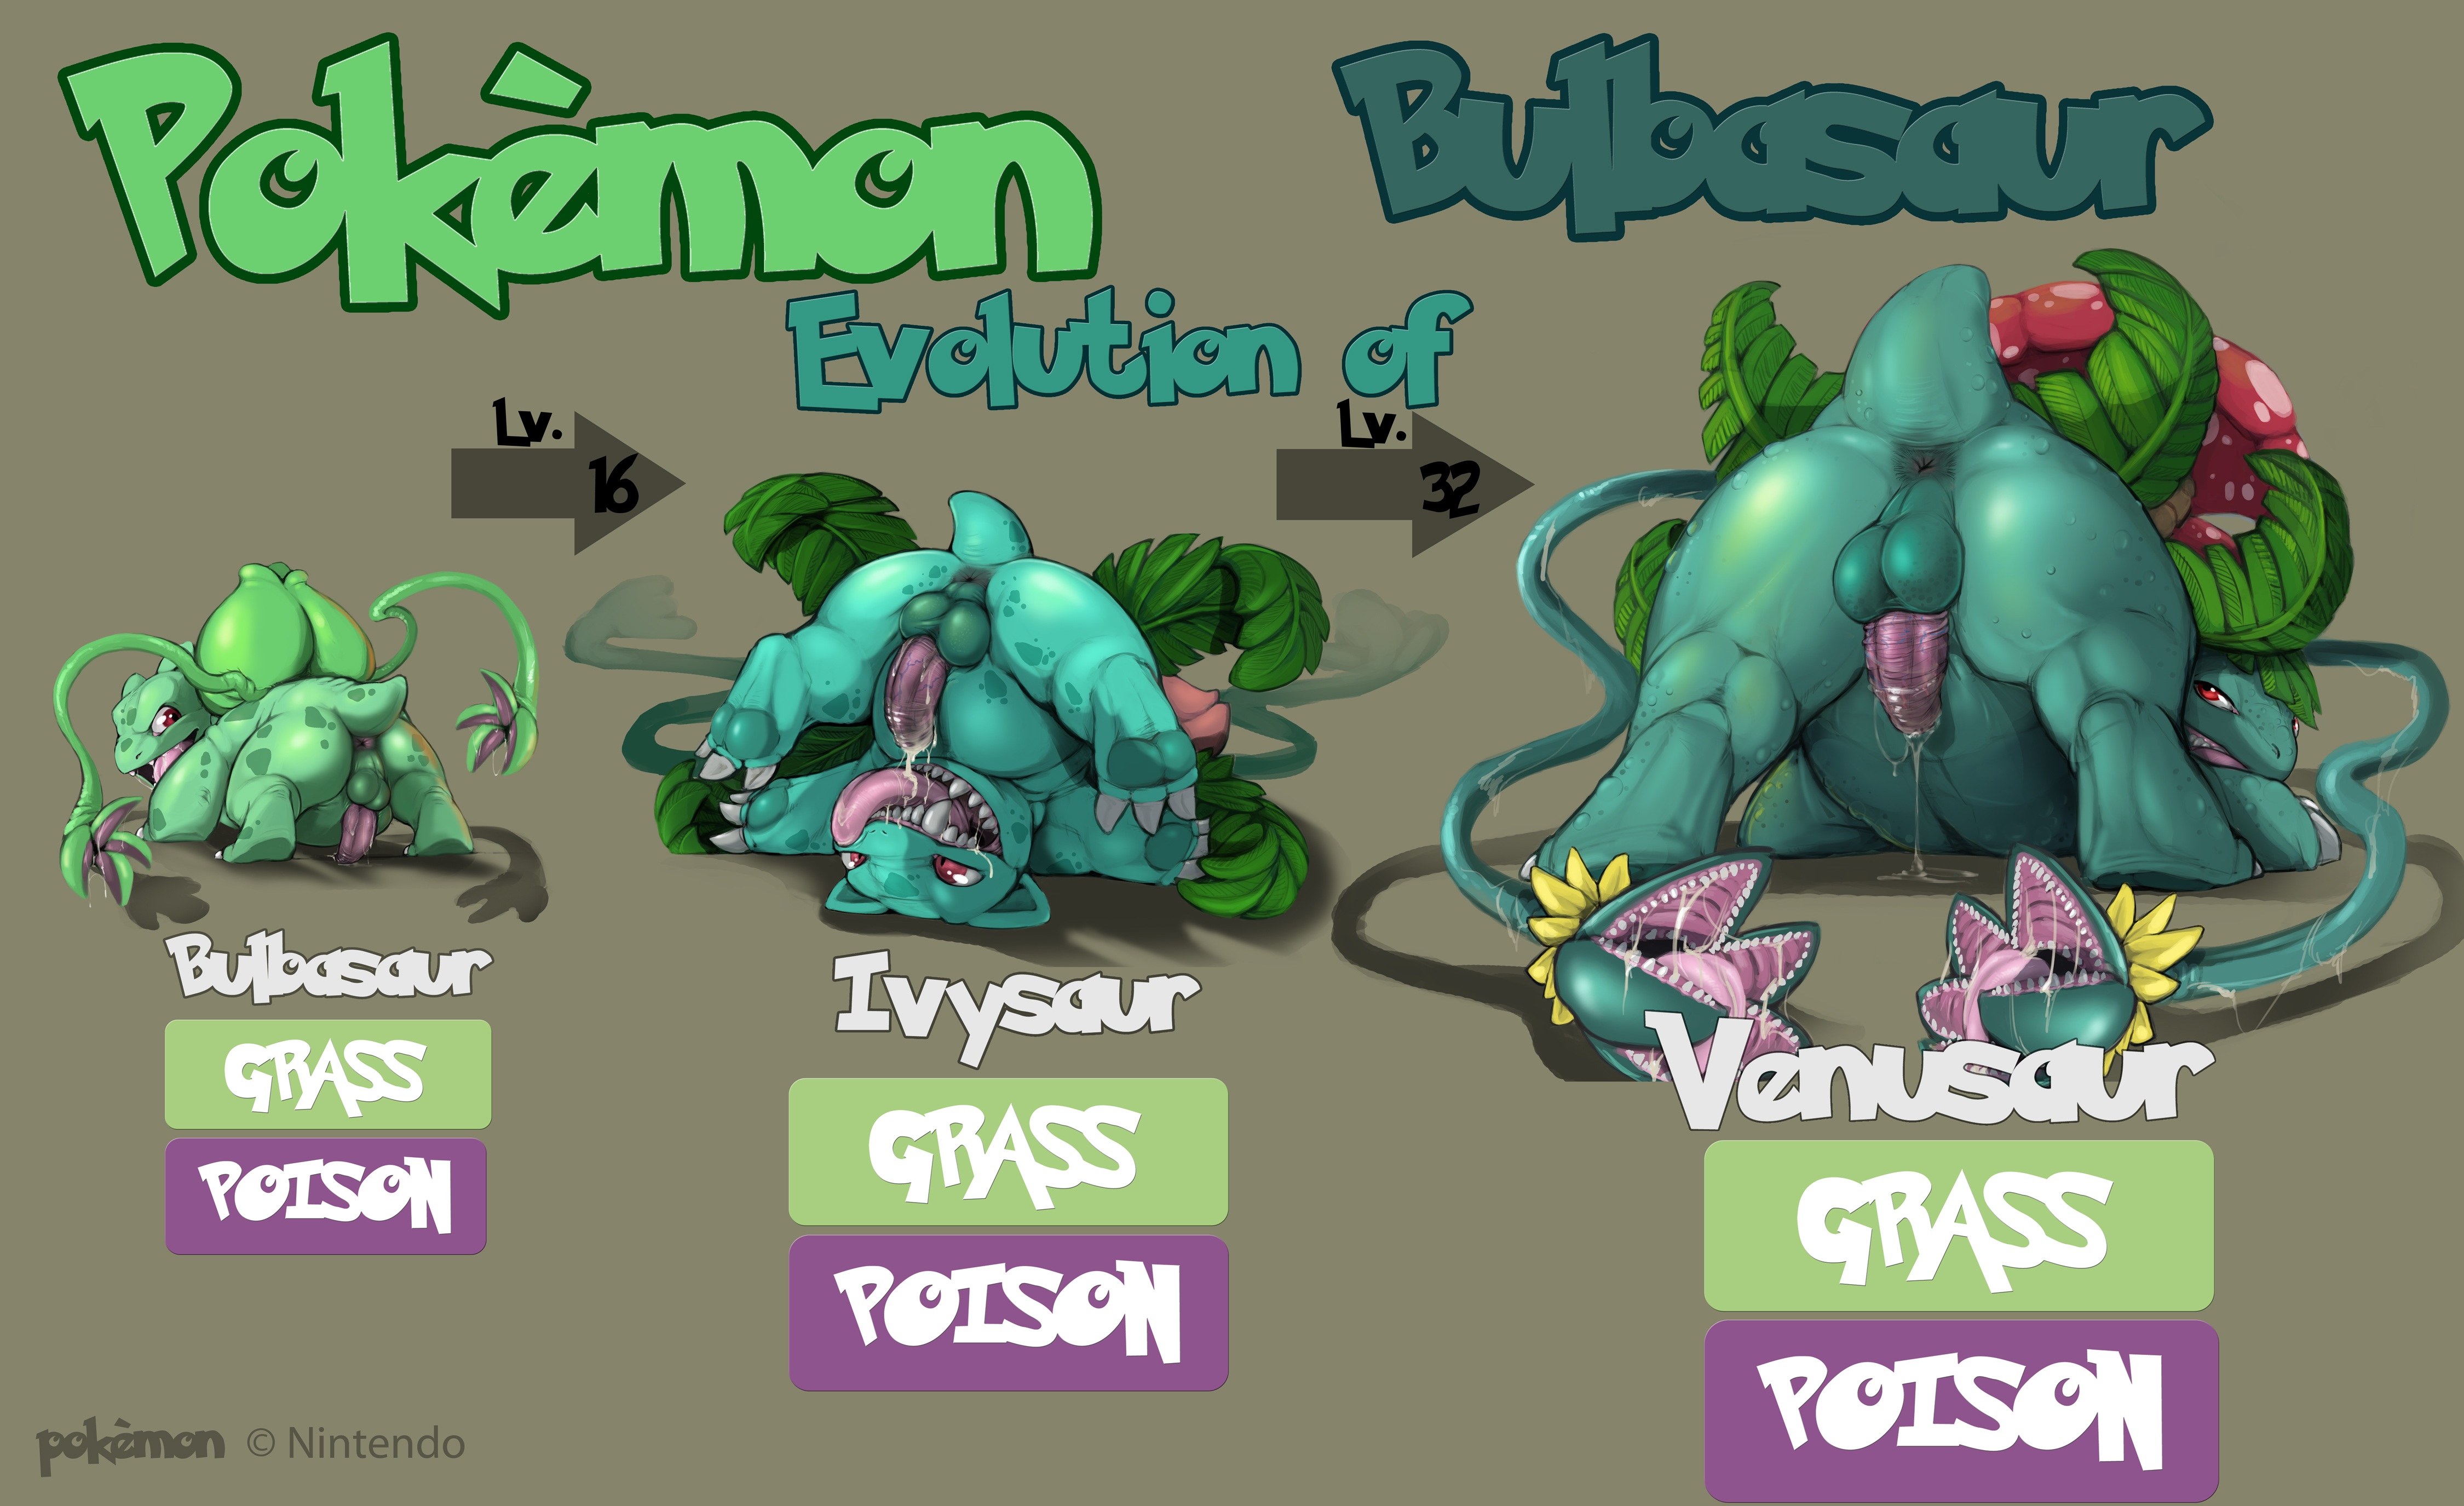 Ychan - g - evolution of totodile - evolution of bulbasaur